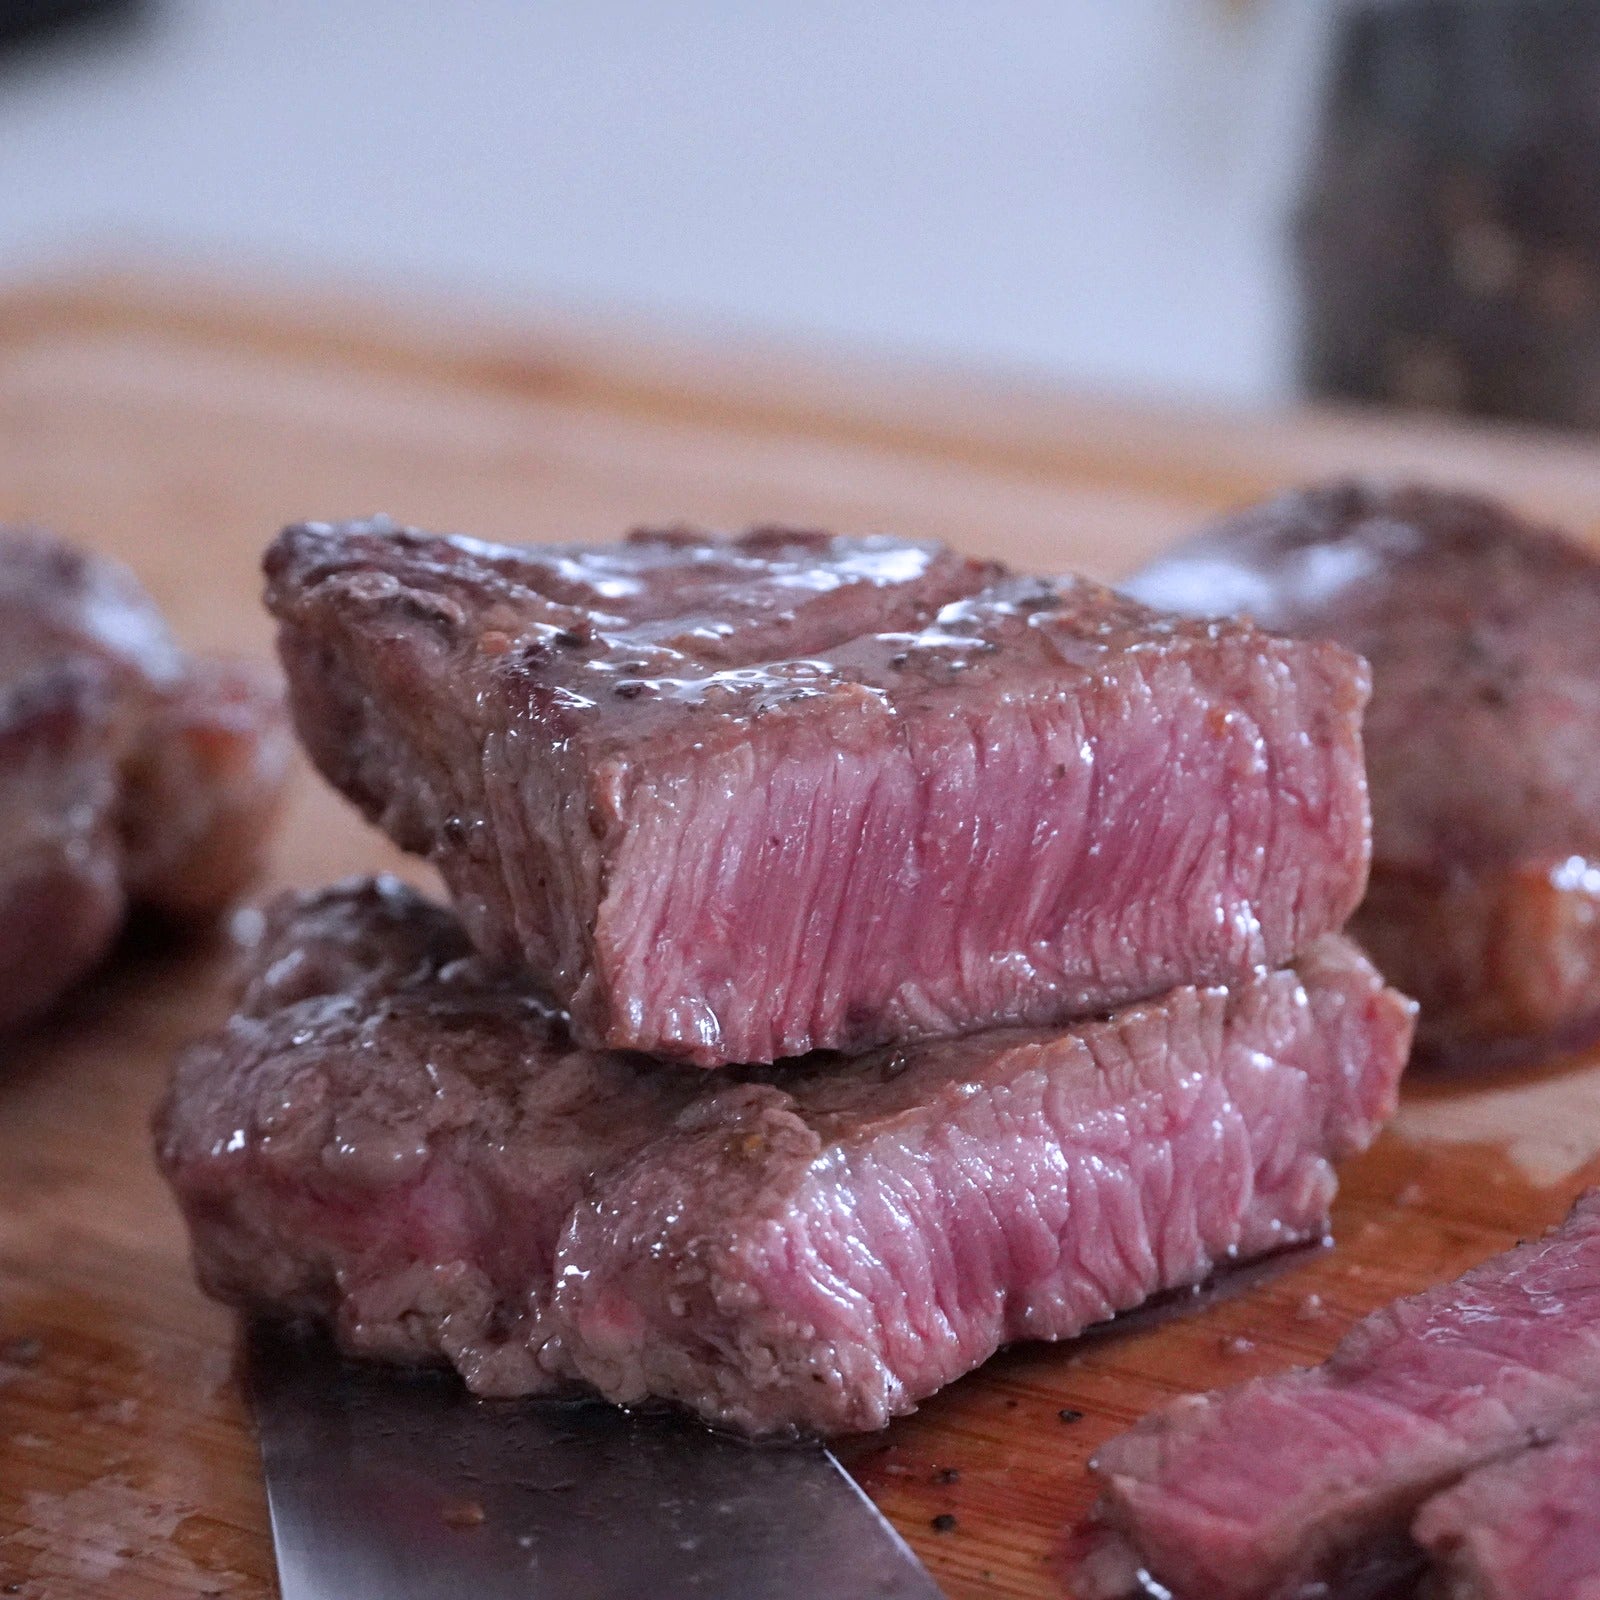 Free-Range Lamb Leg Steaks from New Zealand (500g) - Horizon Farms